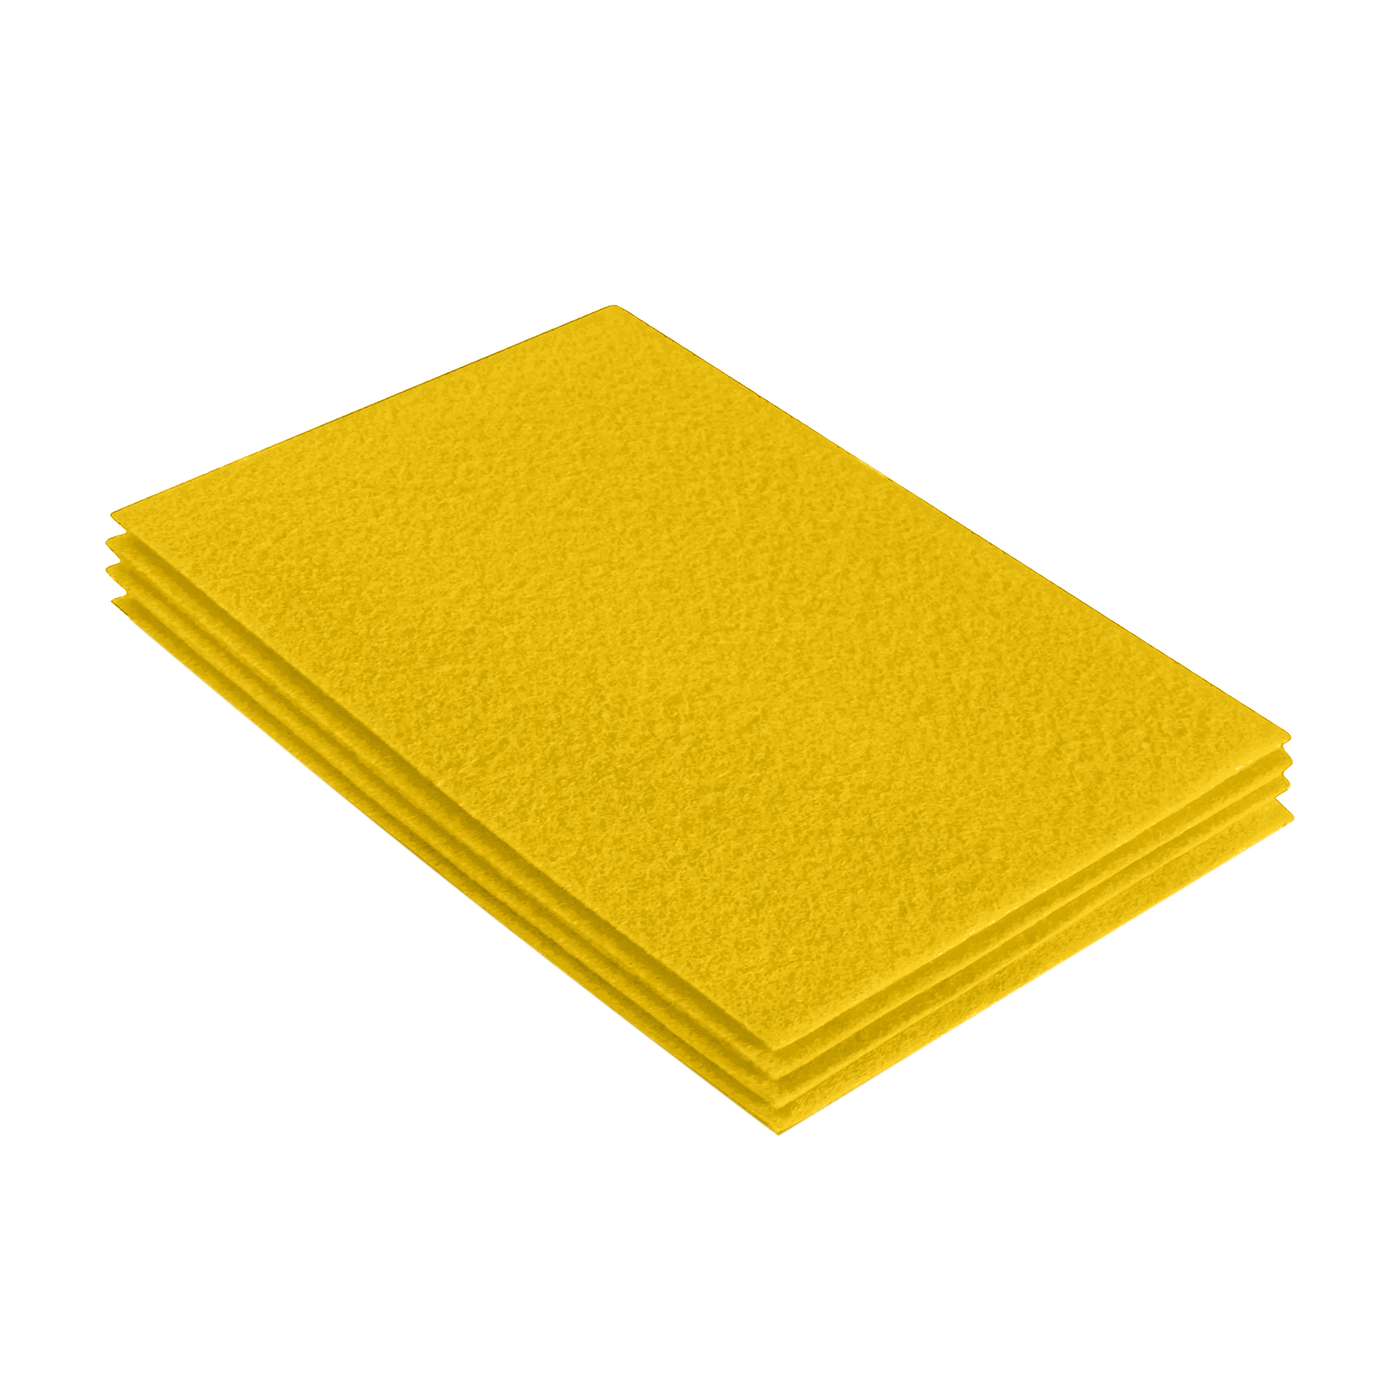 Acrylic Felt 9"X12" Sheet Packs | Yellow - FabricLA.com